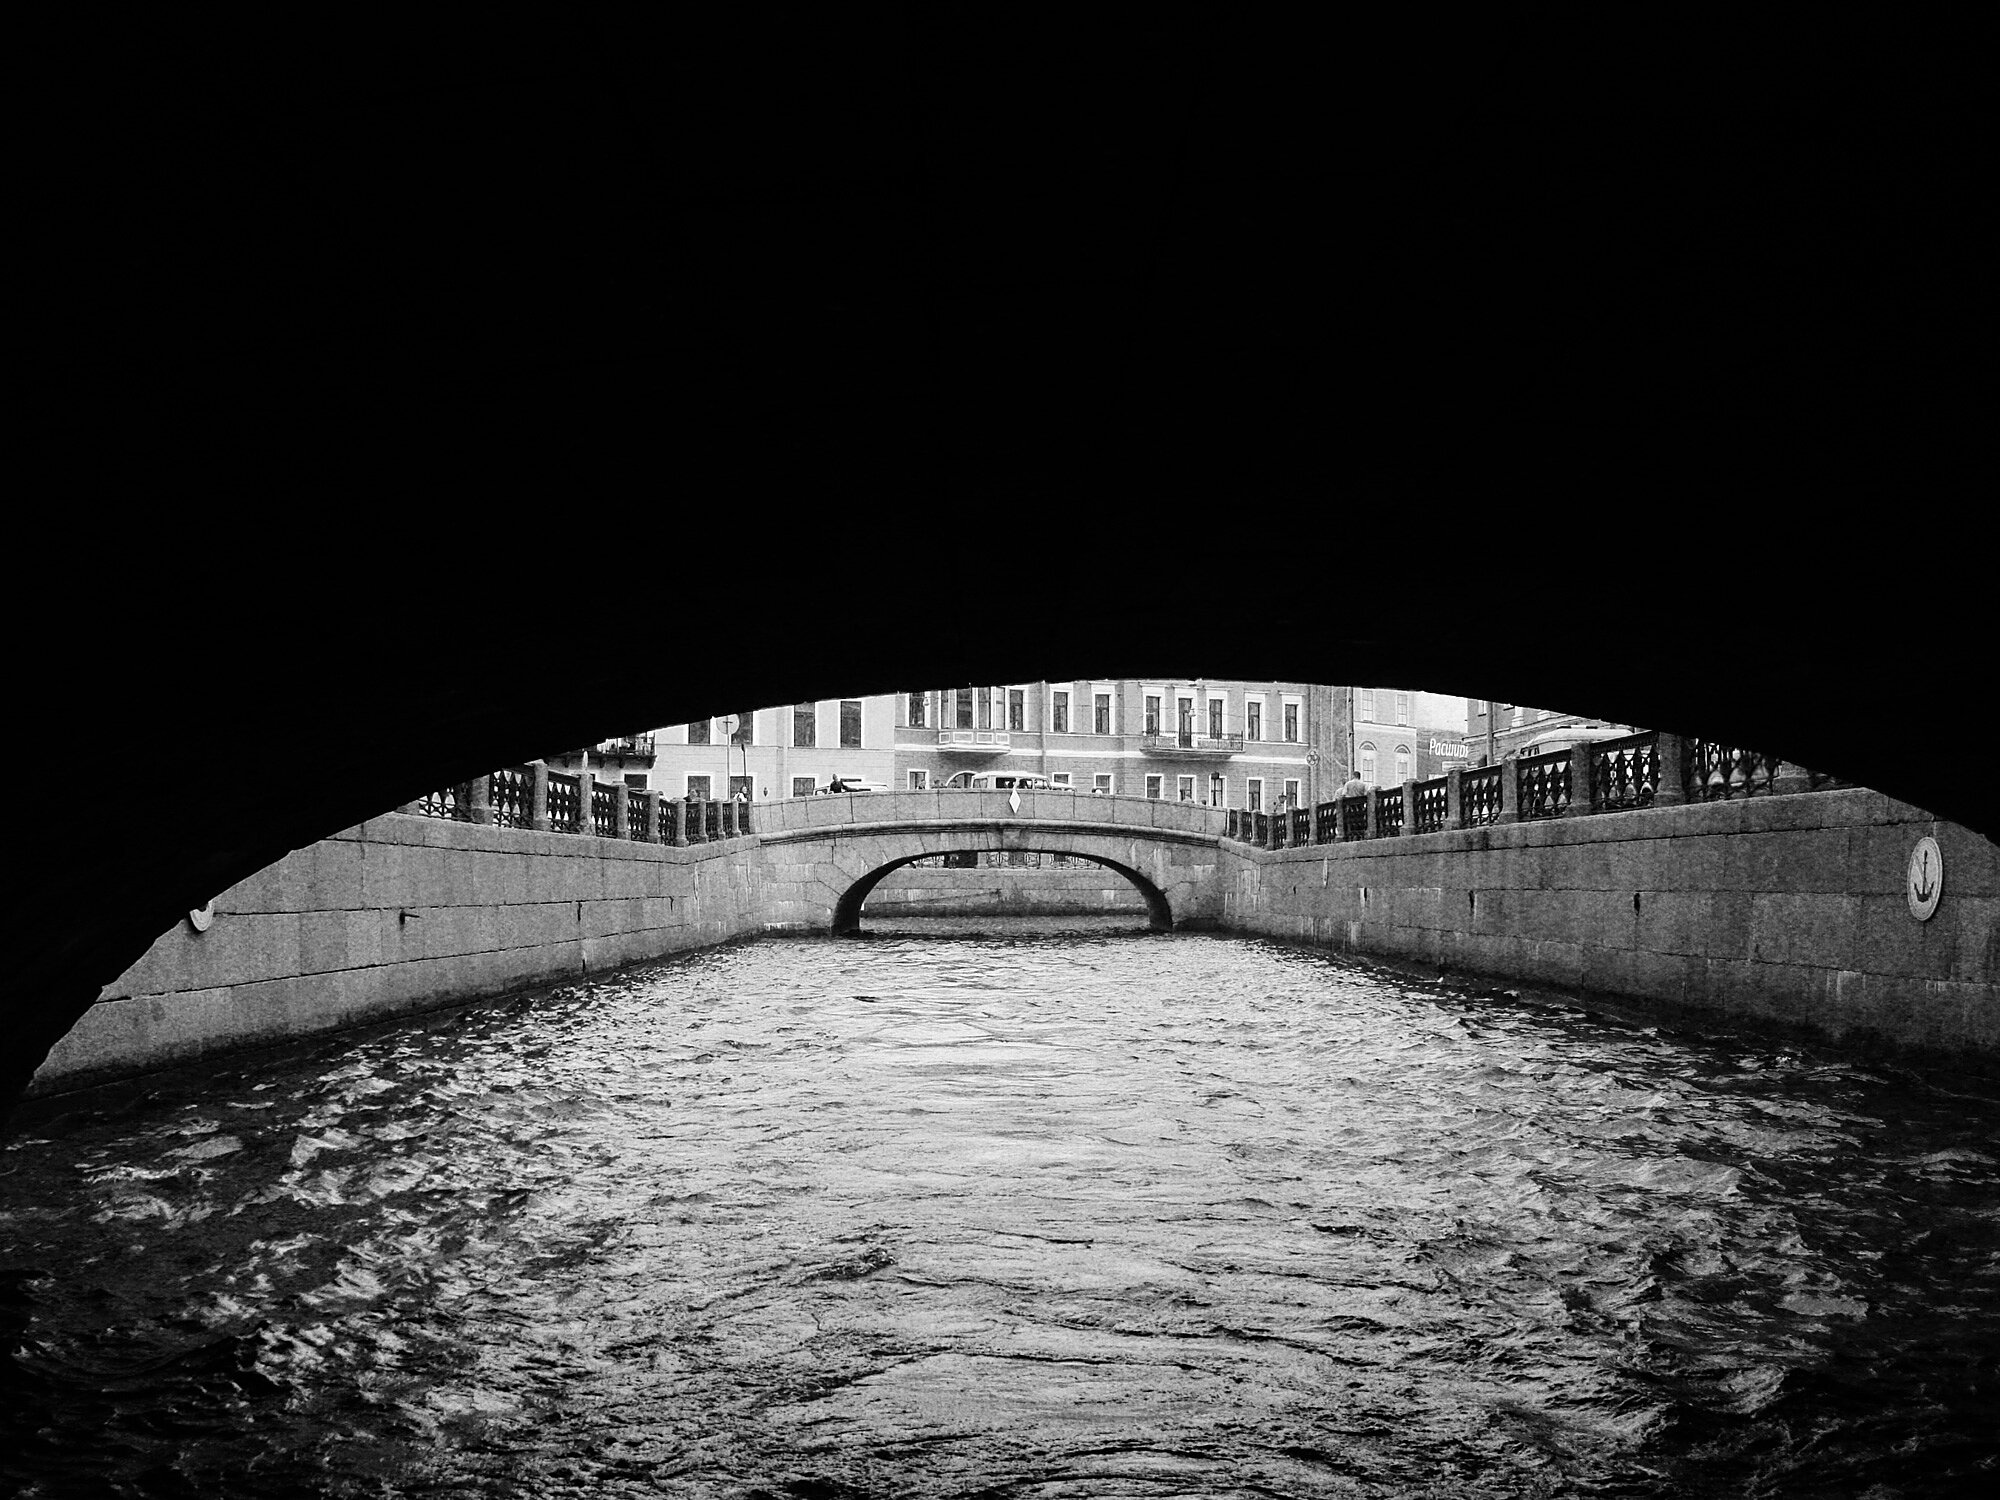 Canal Bridge, 2007 - St. Petersburg, Russia